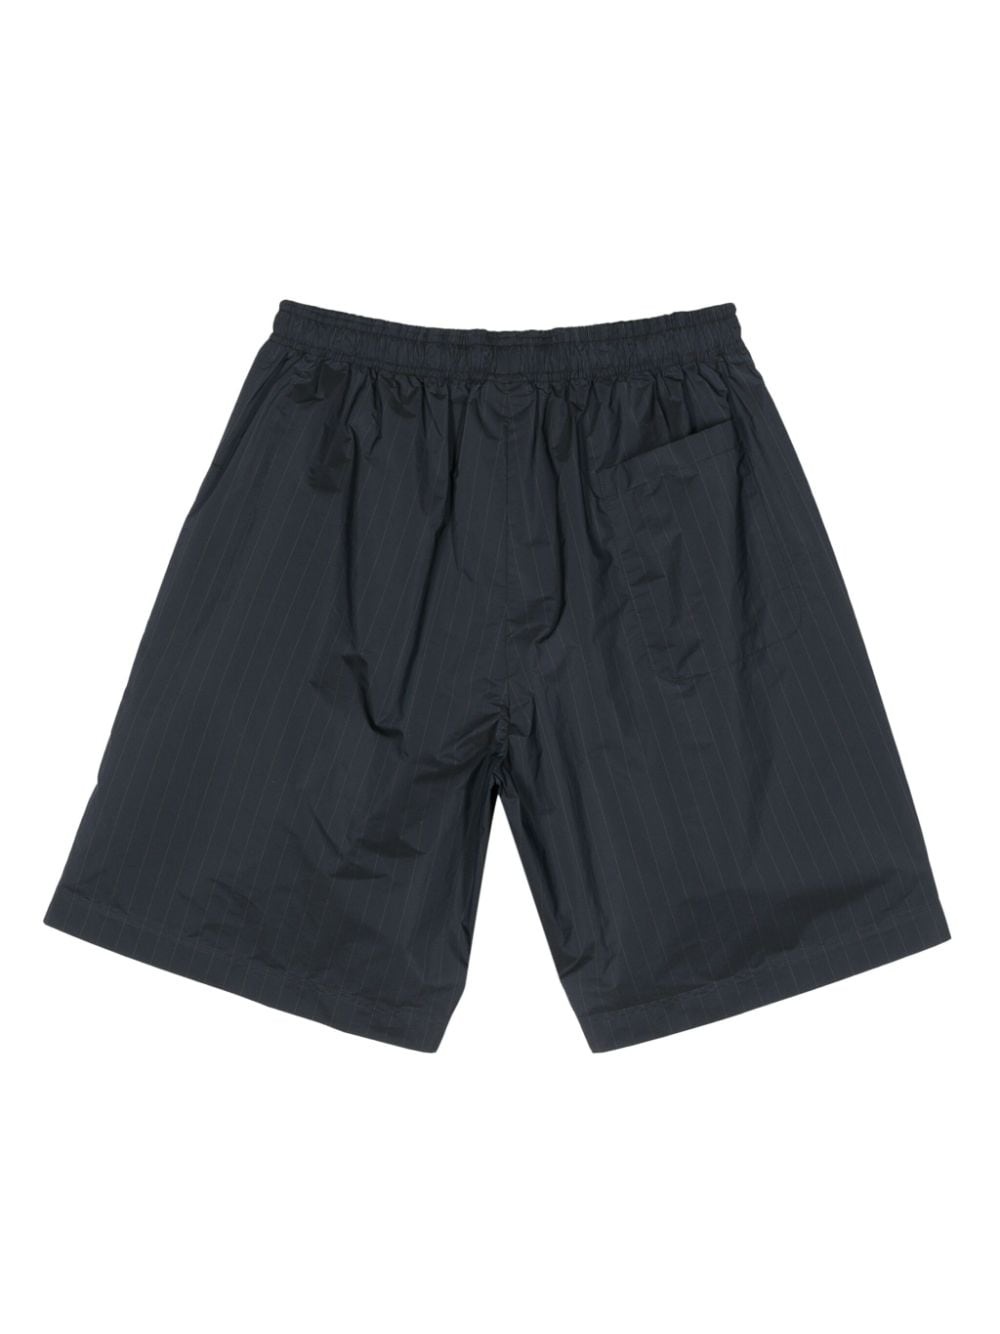 pinstripe deck shorts - 2